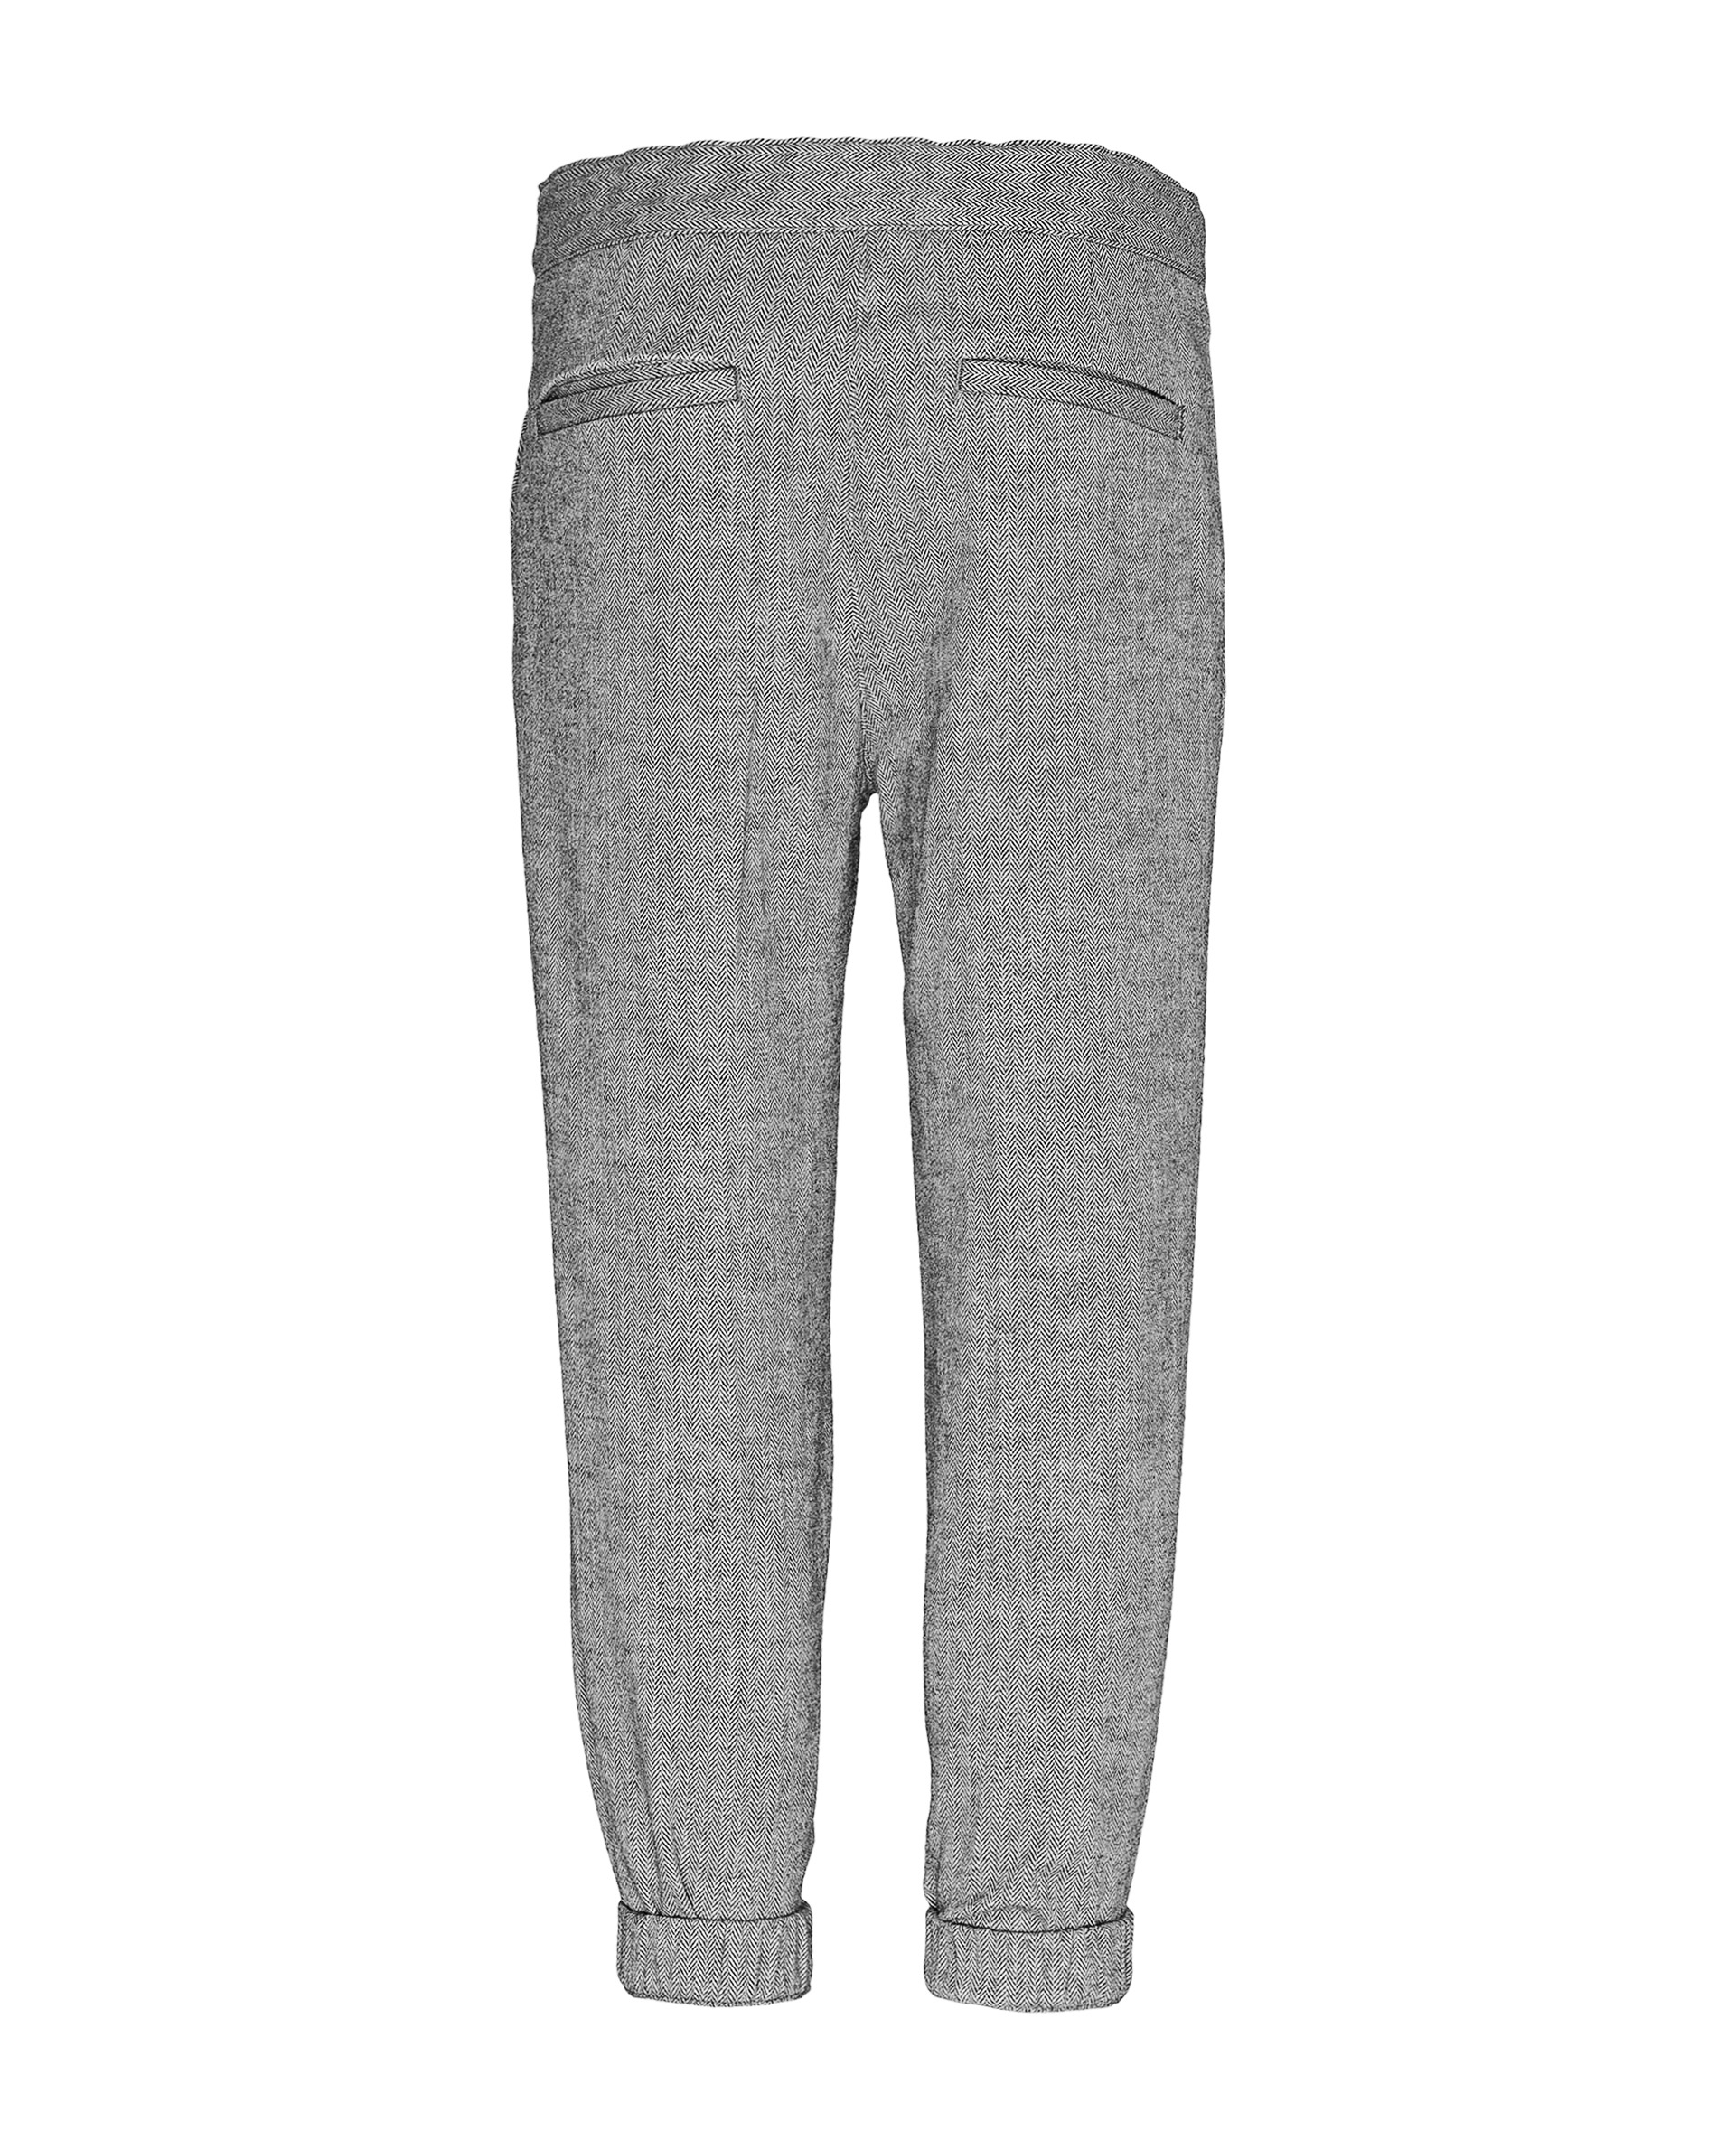 Серые брюки Gulliver 21901GMC6301, размер 104, цвет серый - фото 3